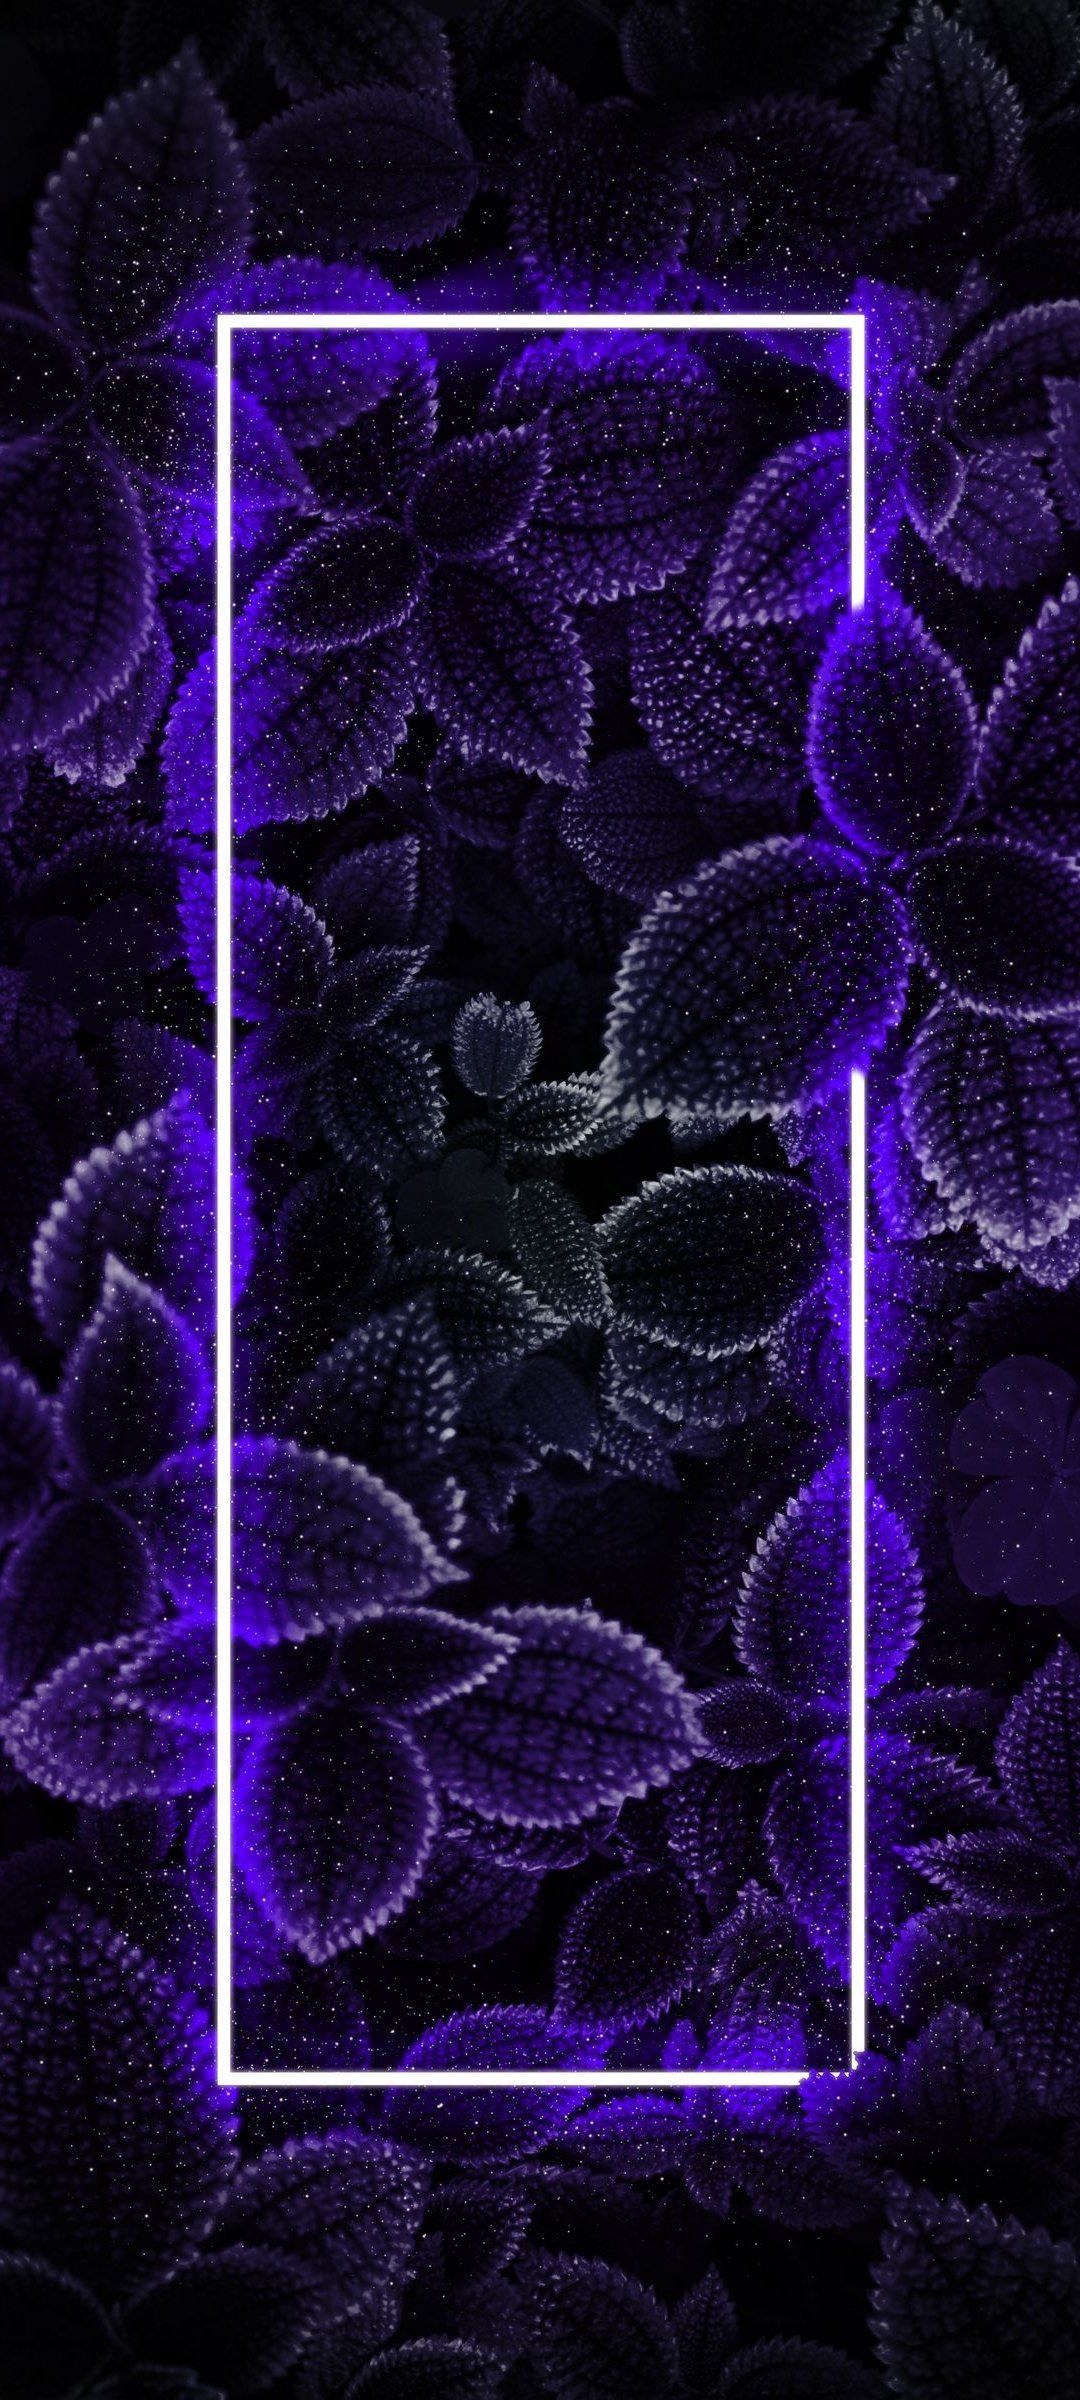 Aesthetic neon purple wallpaper with a border - Border